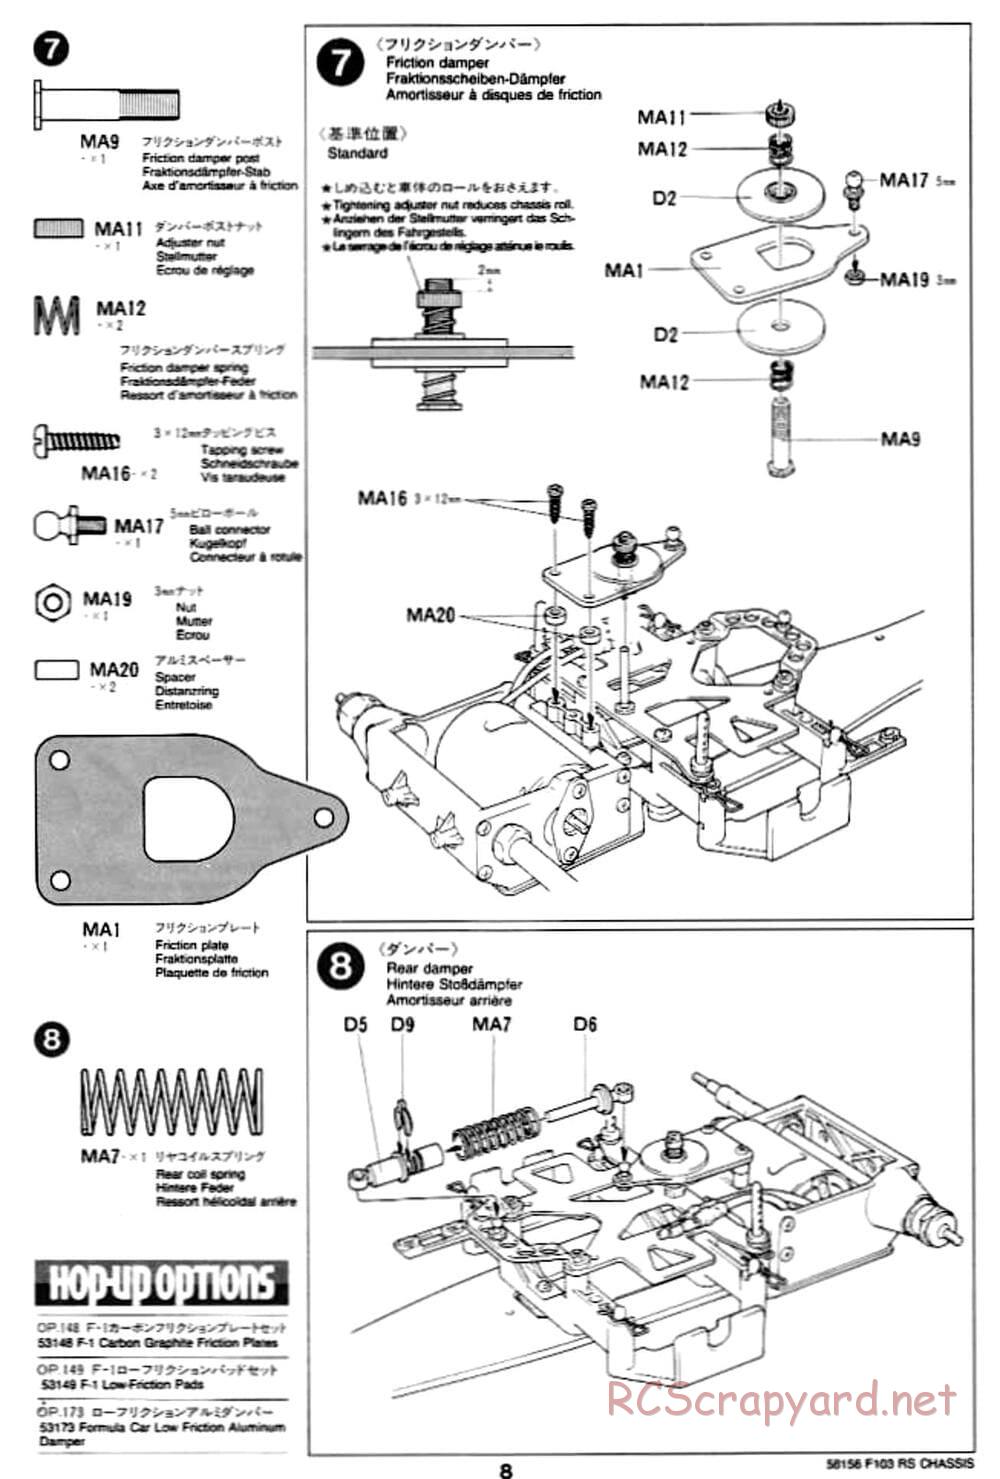 Tamiya - F103RS Chassis - Manual - Page 8